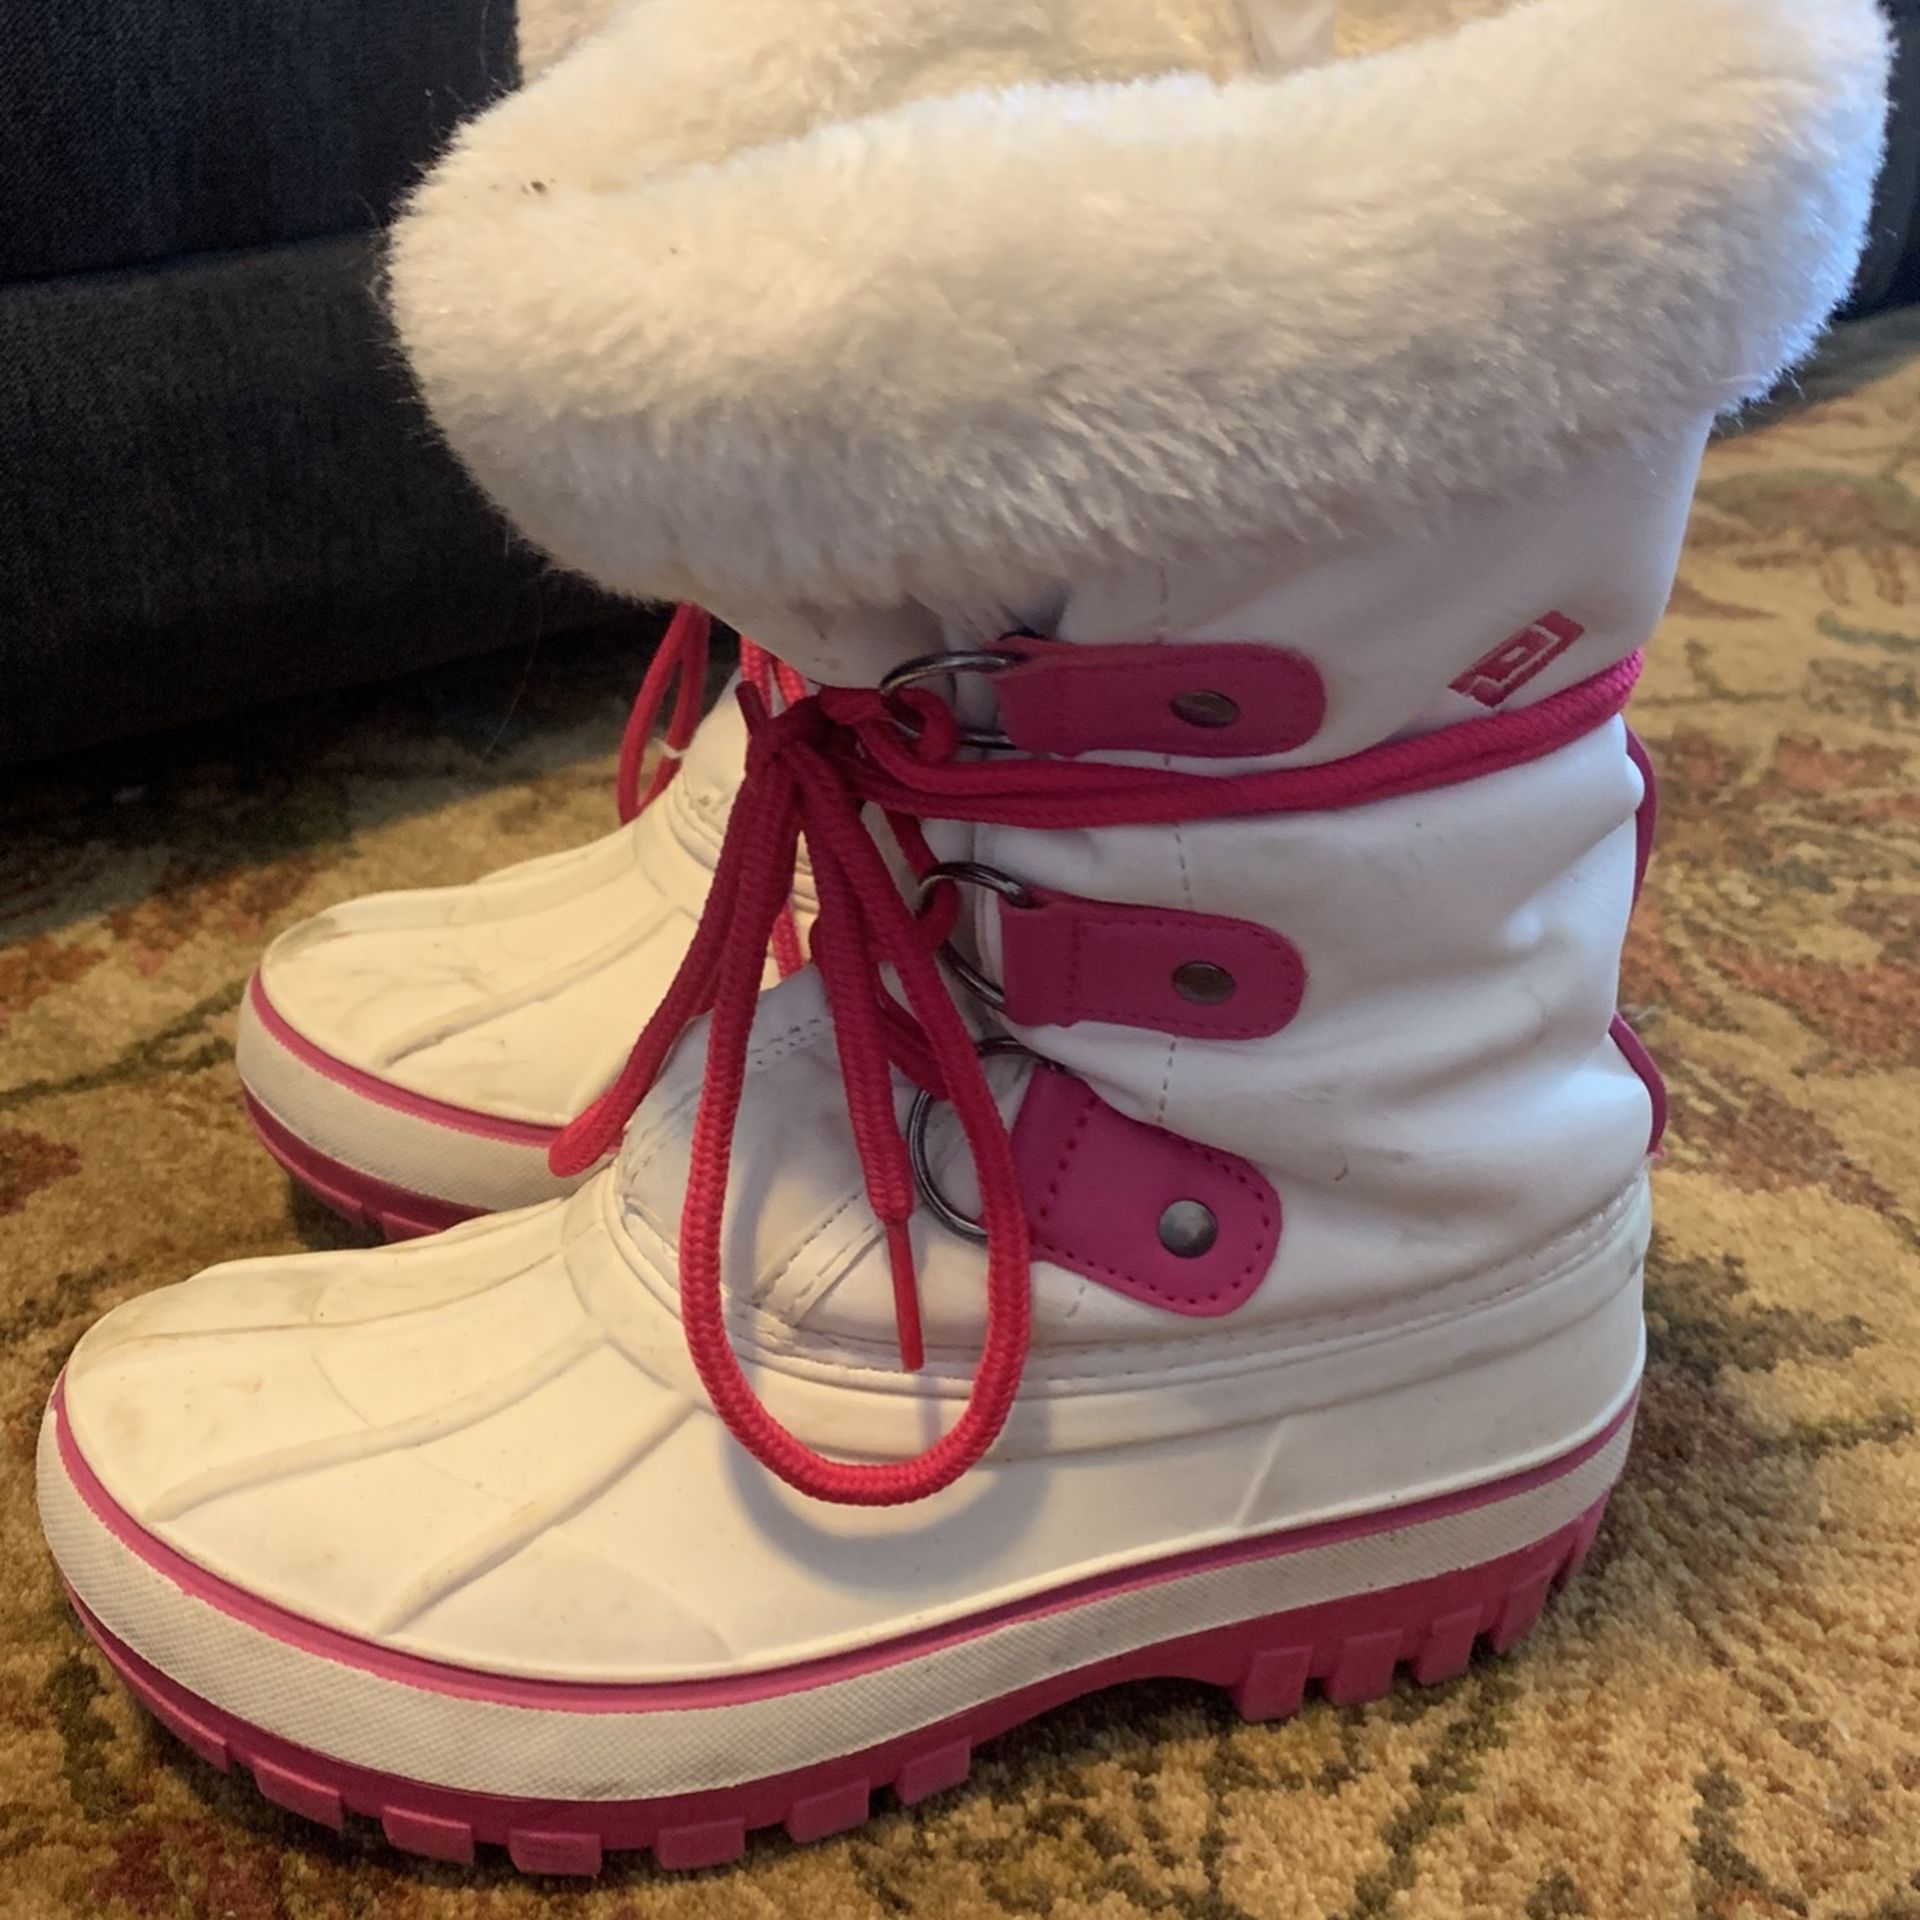 Kids Snow Boots Size 12